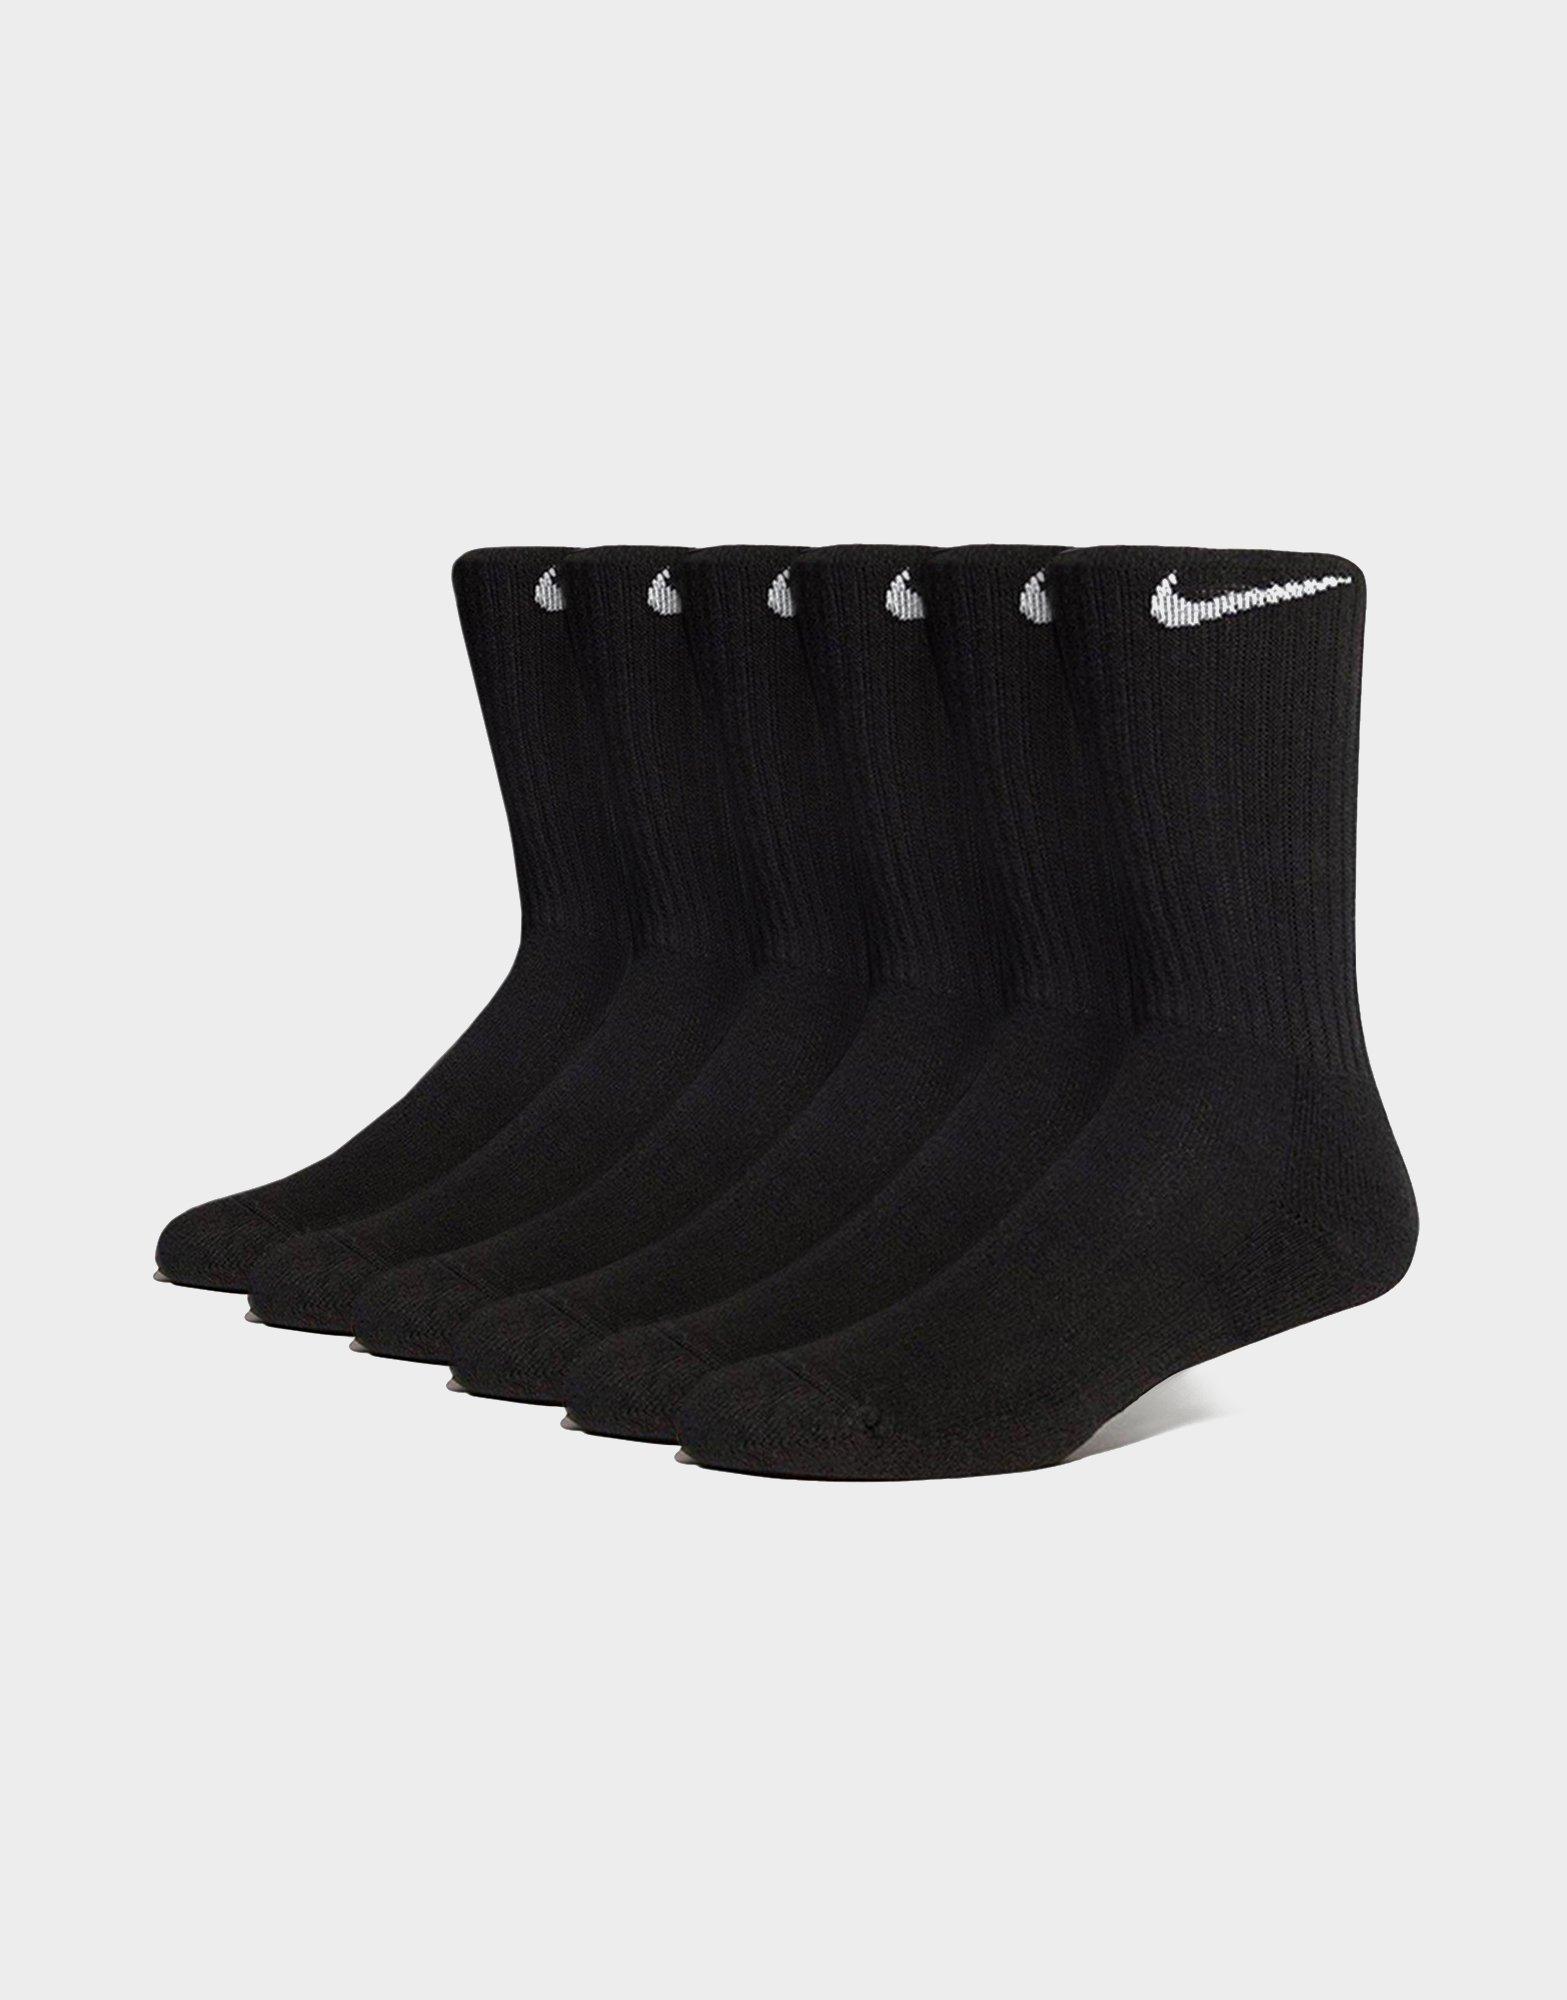 6 pack black nike socks